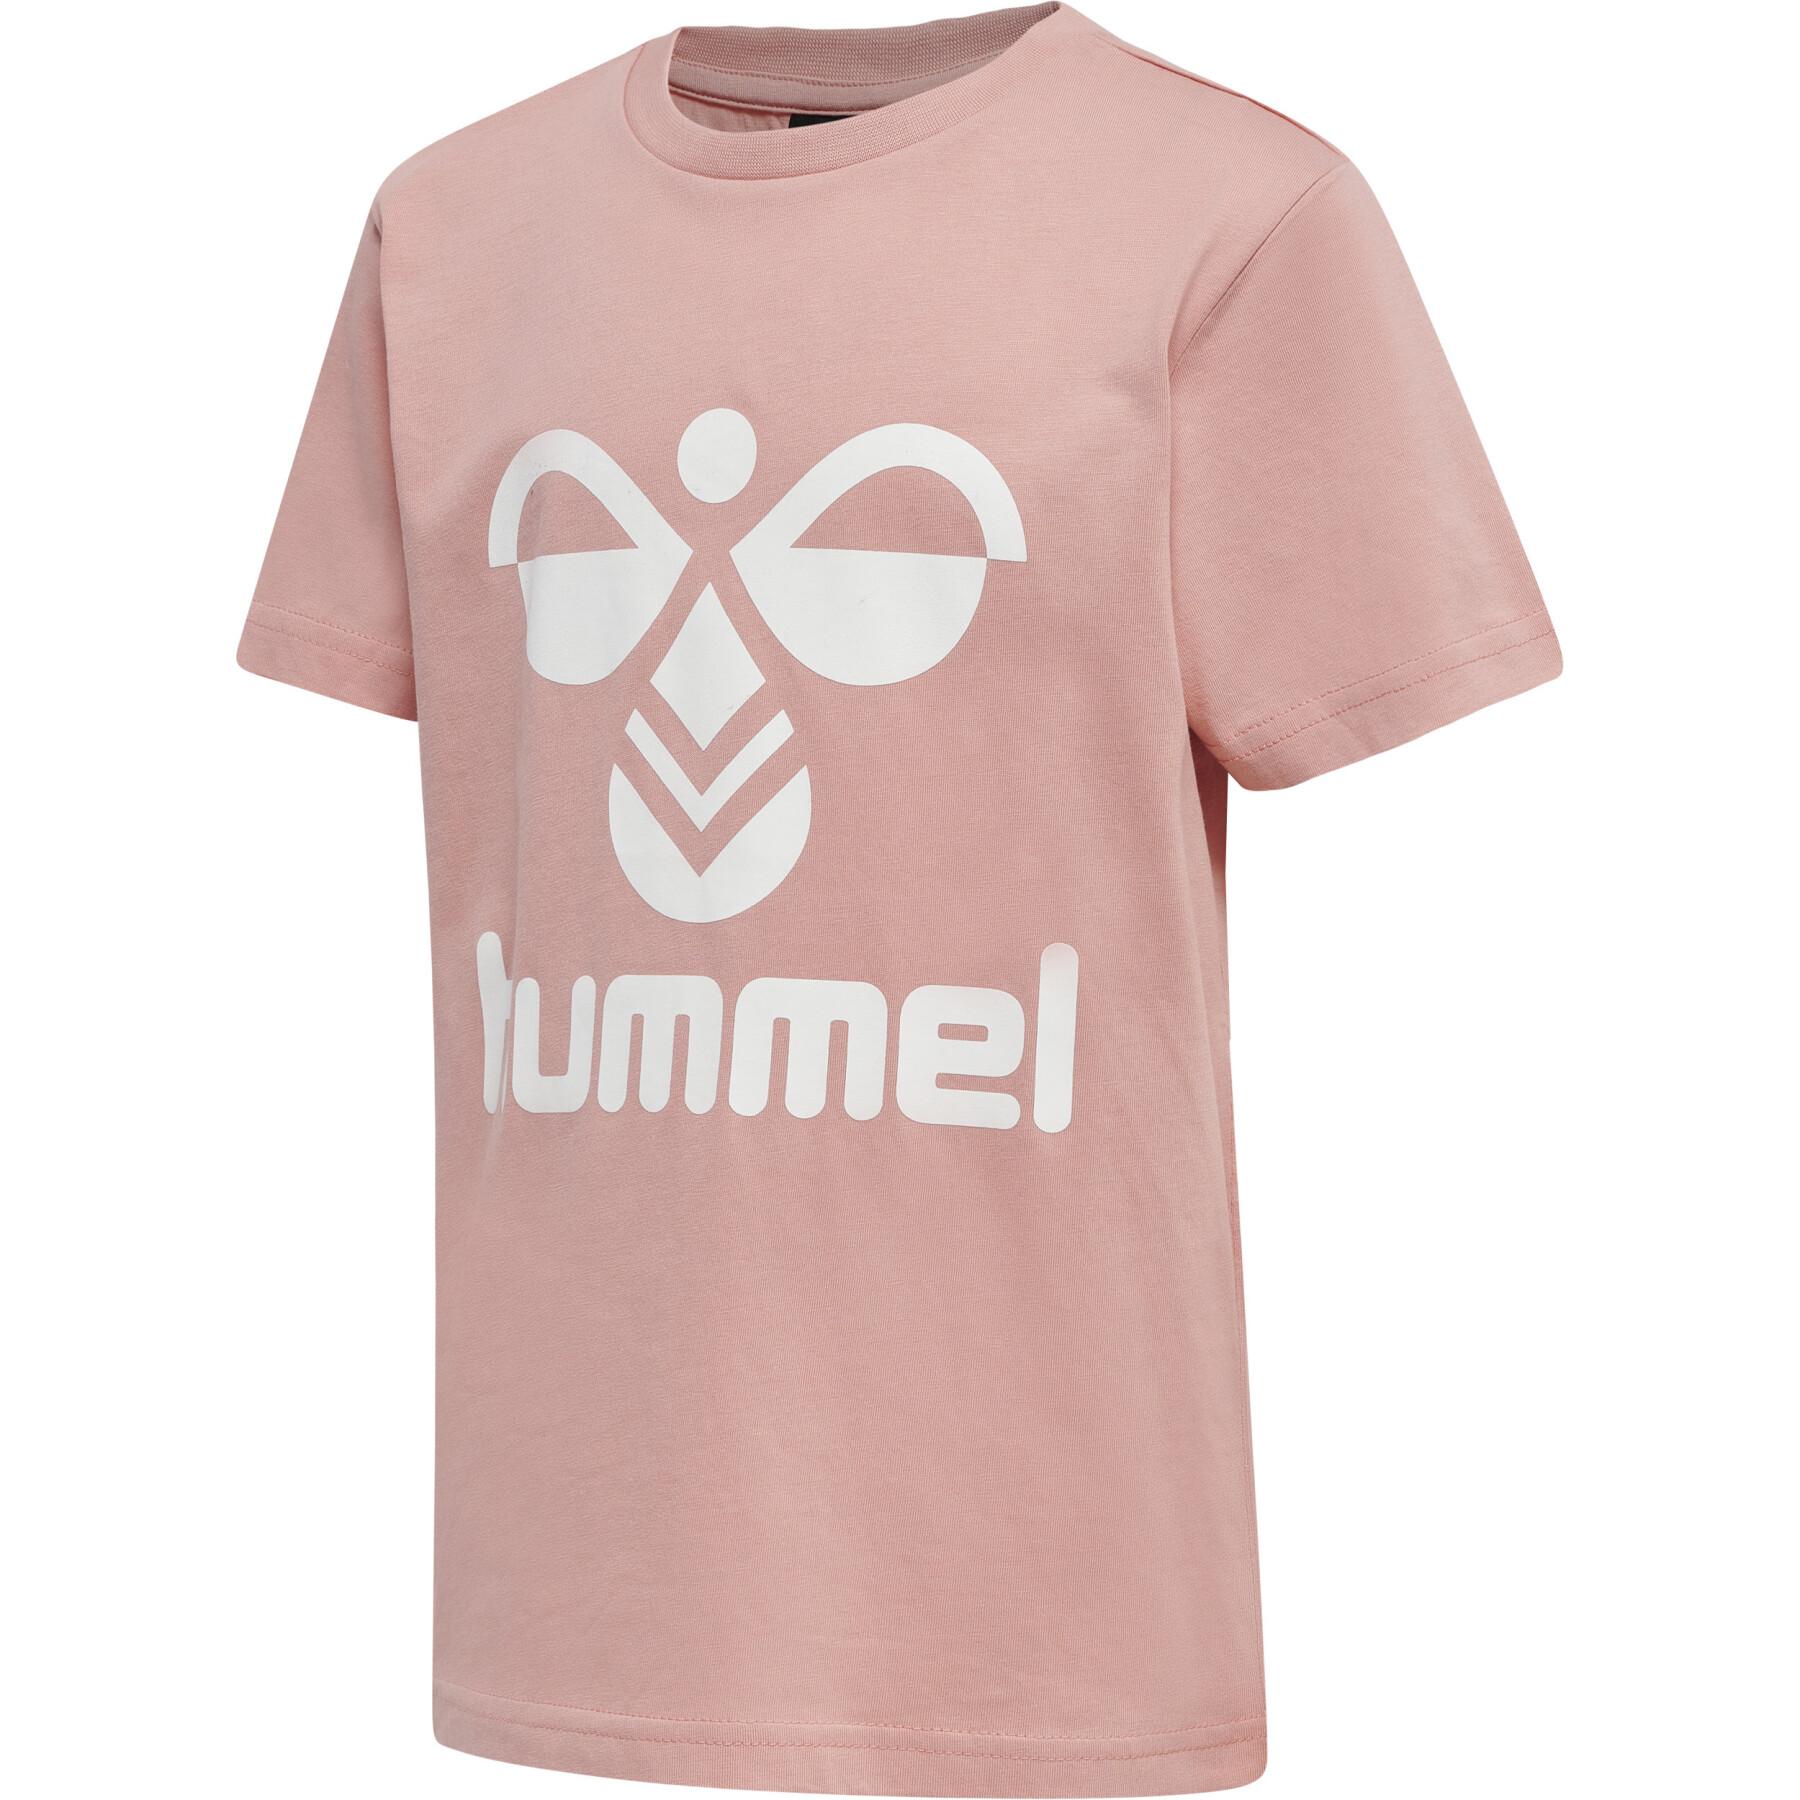 T-shirt fille Hummel Tres